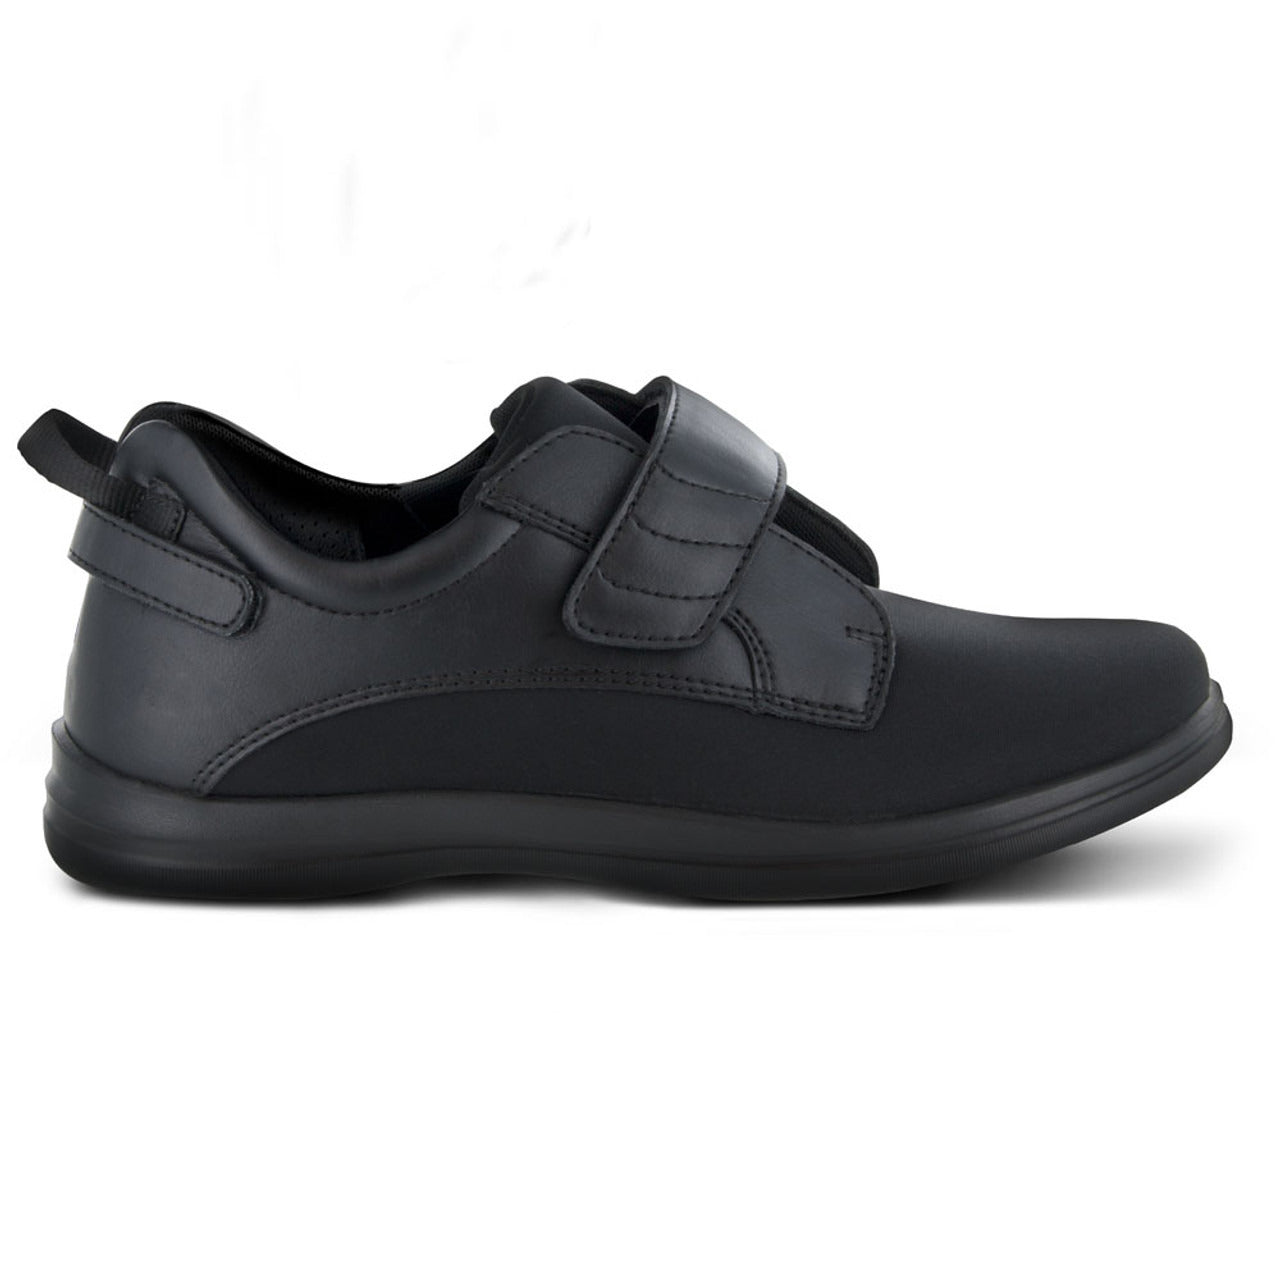 Apexfoot Men's Balance Shoe (ABS) Black - X-Wide (4E)